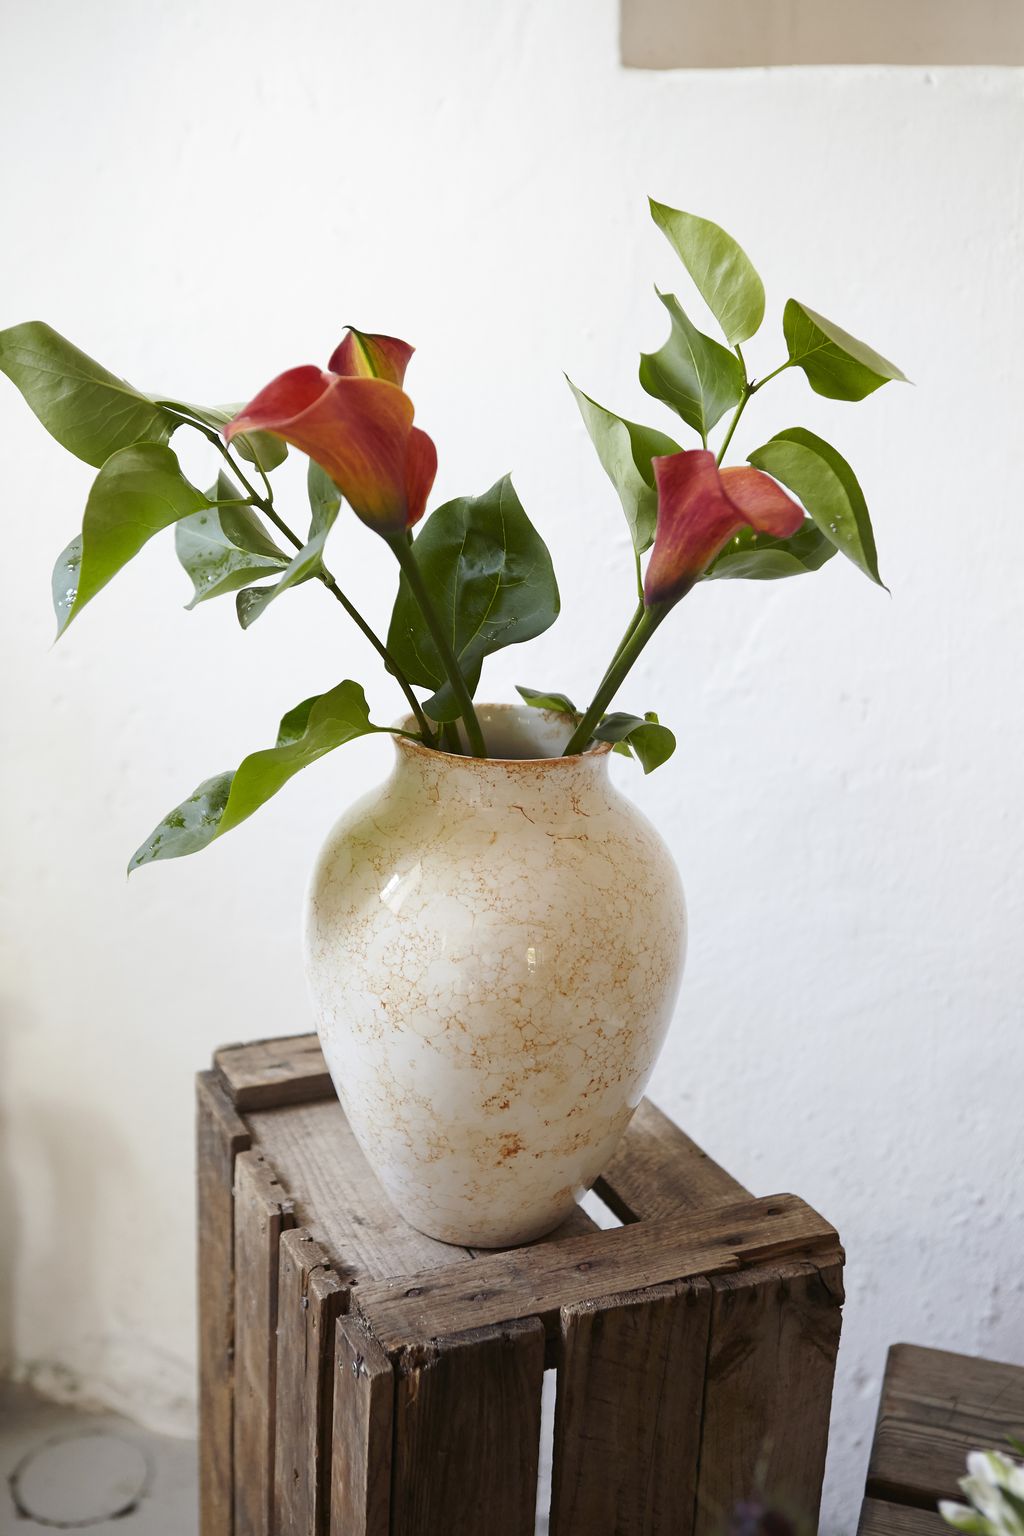 Knabstrup Keramik Vase Natura H 20 cm, blanco/marrón